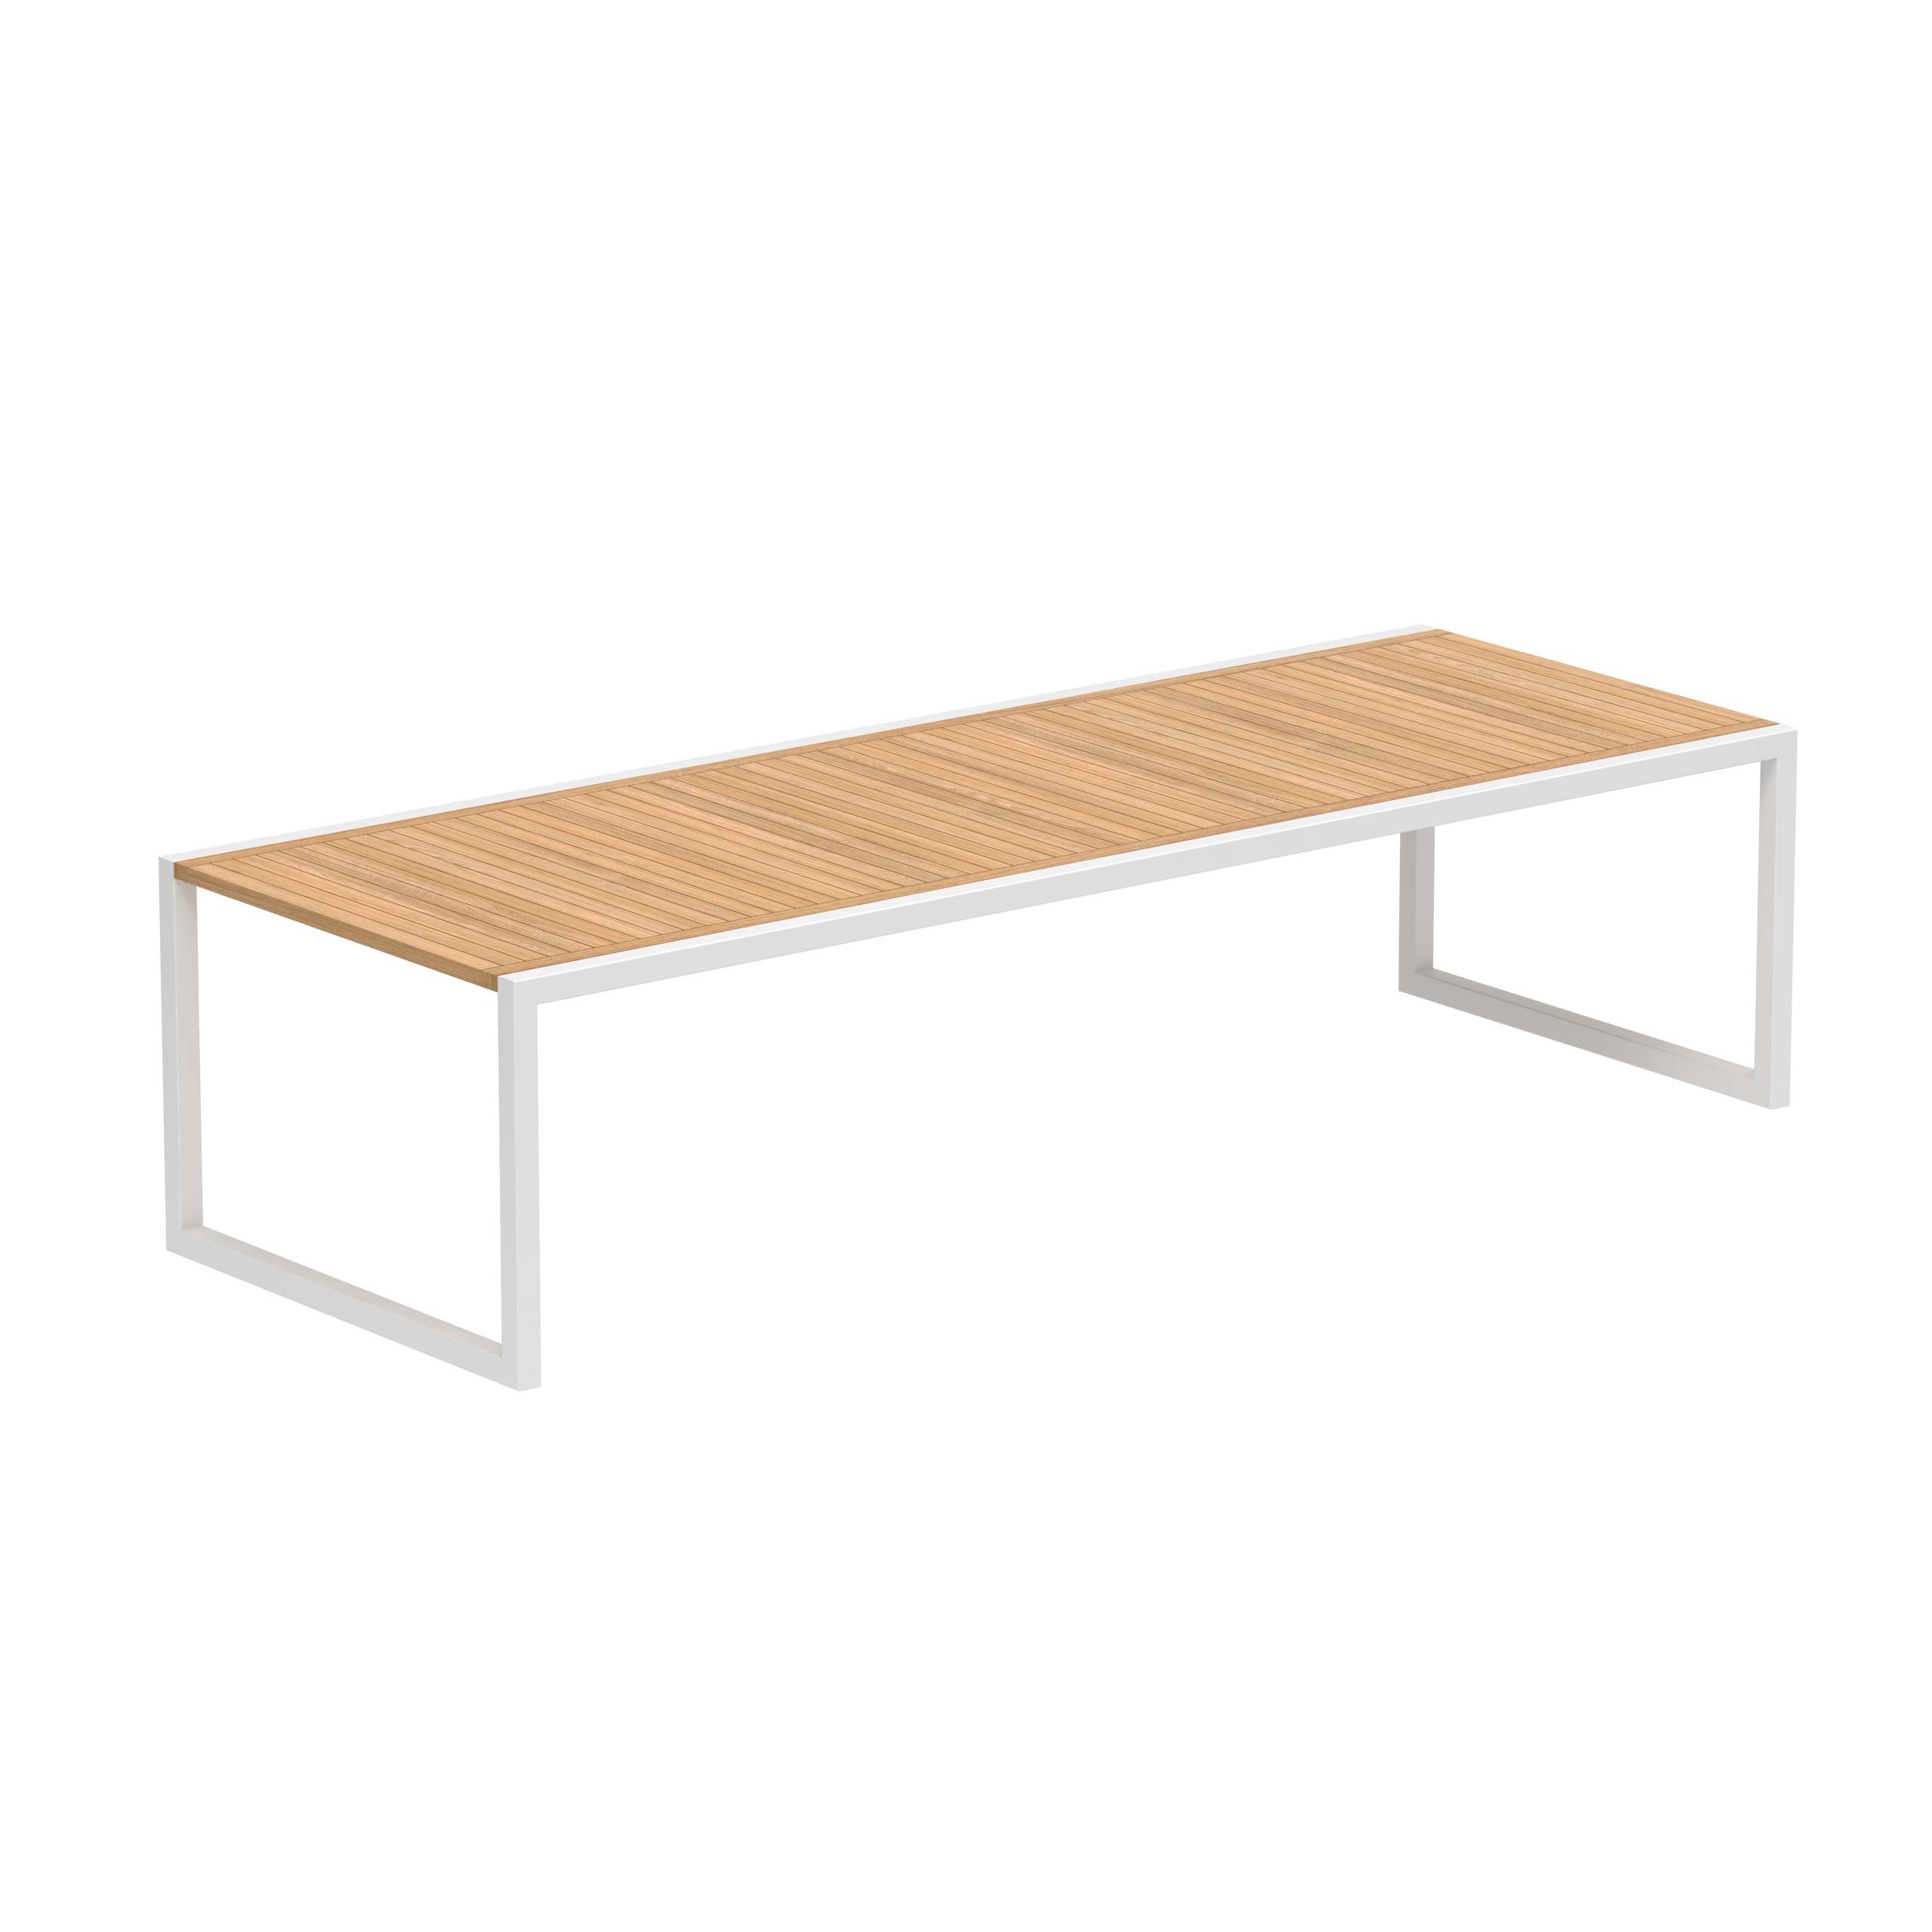 Ninix 300 Table White Frame + Teak Tabletop